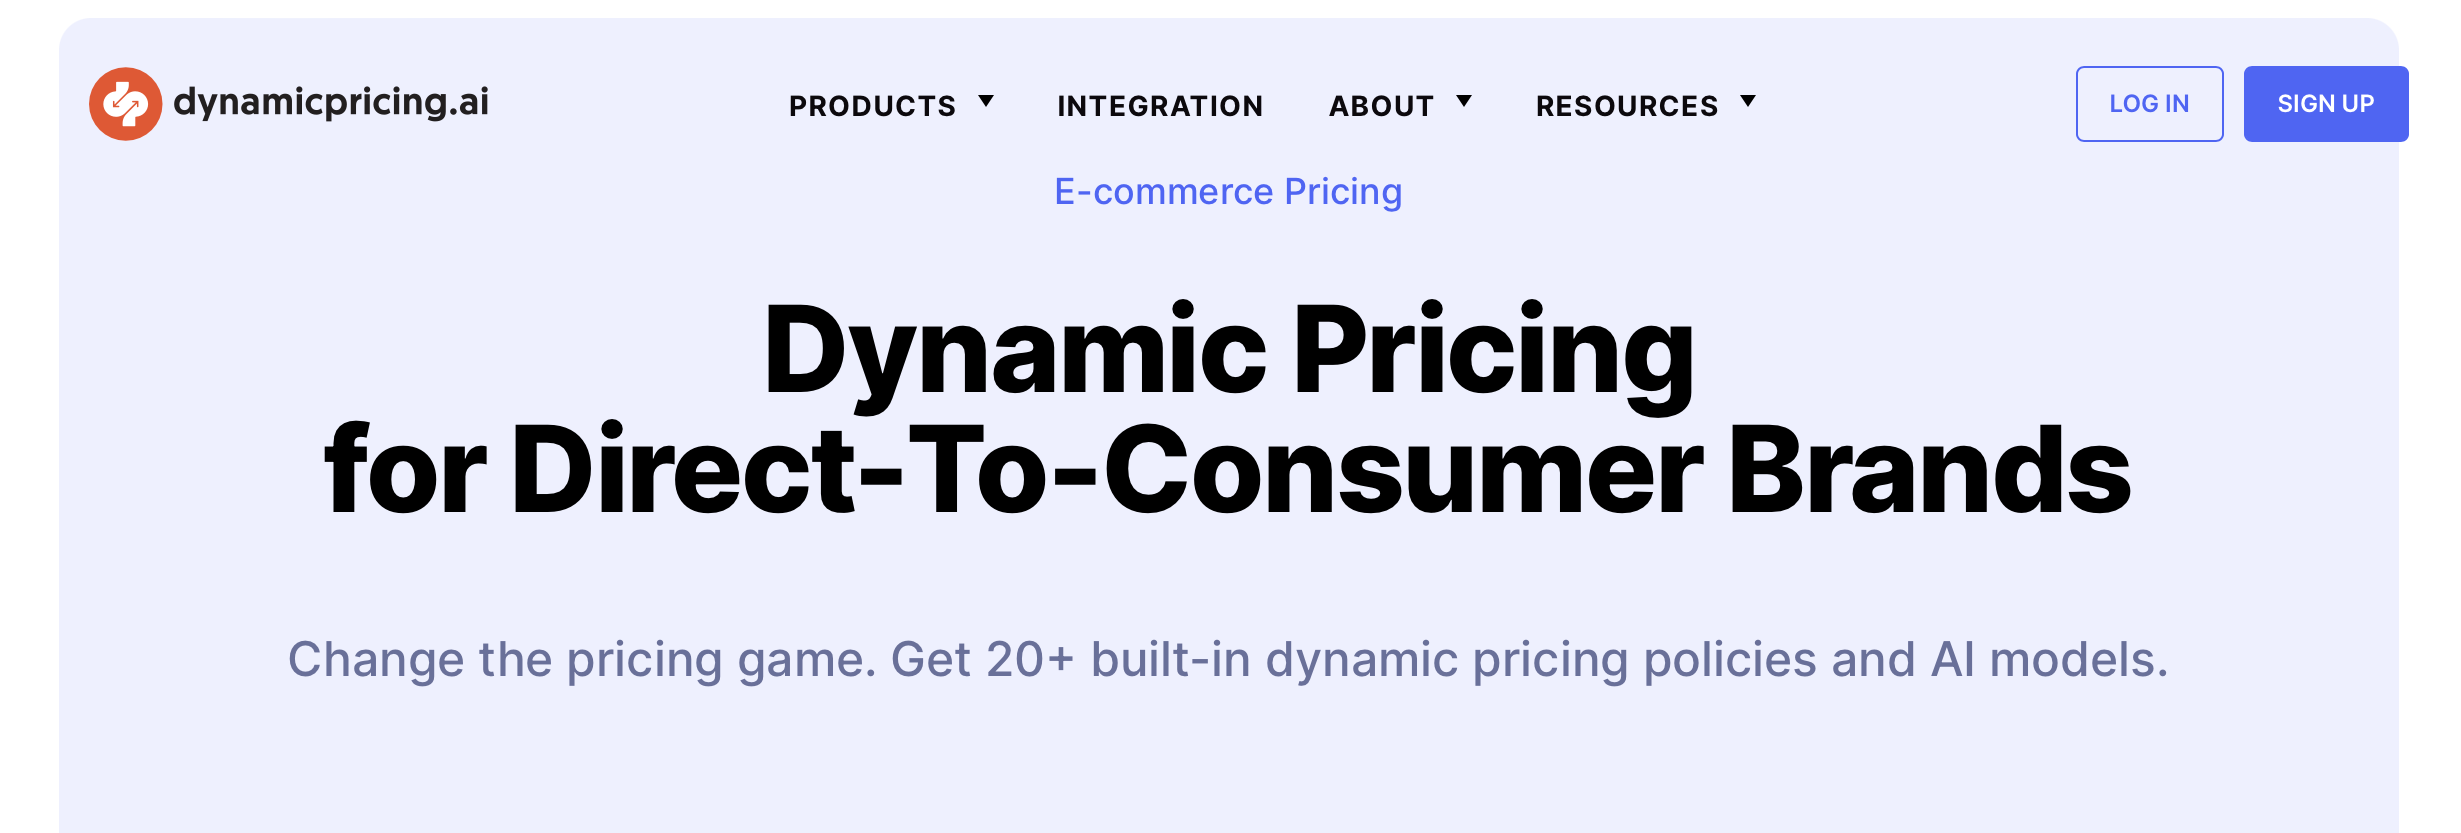 Dynamic pricing.ai homepage